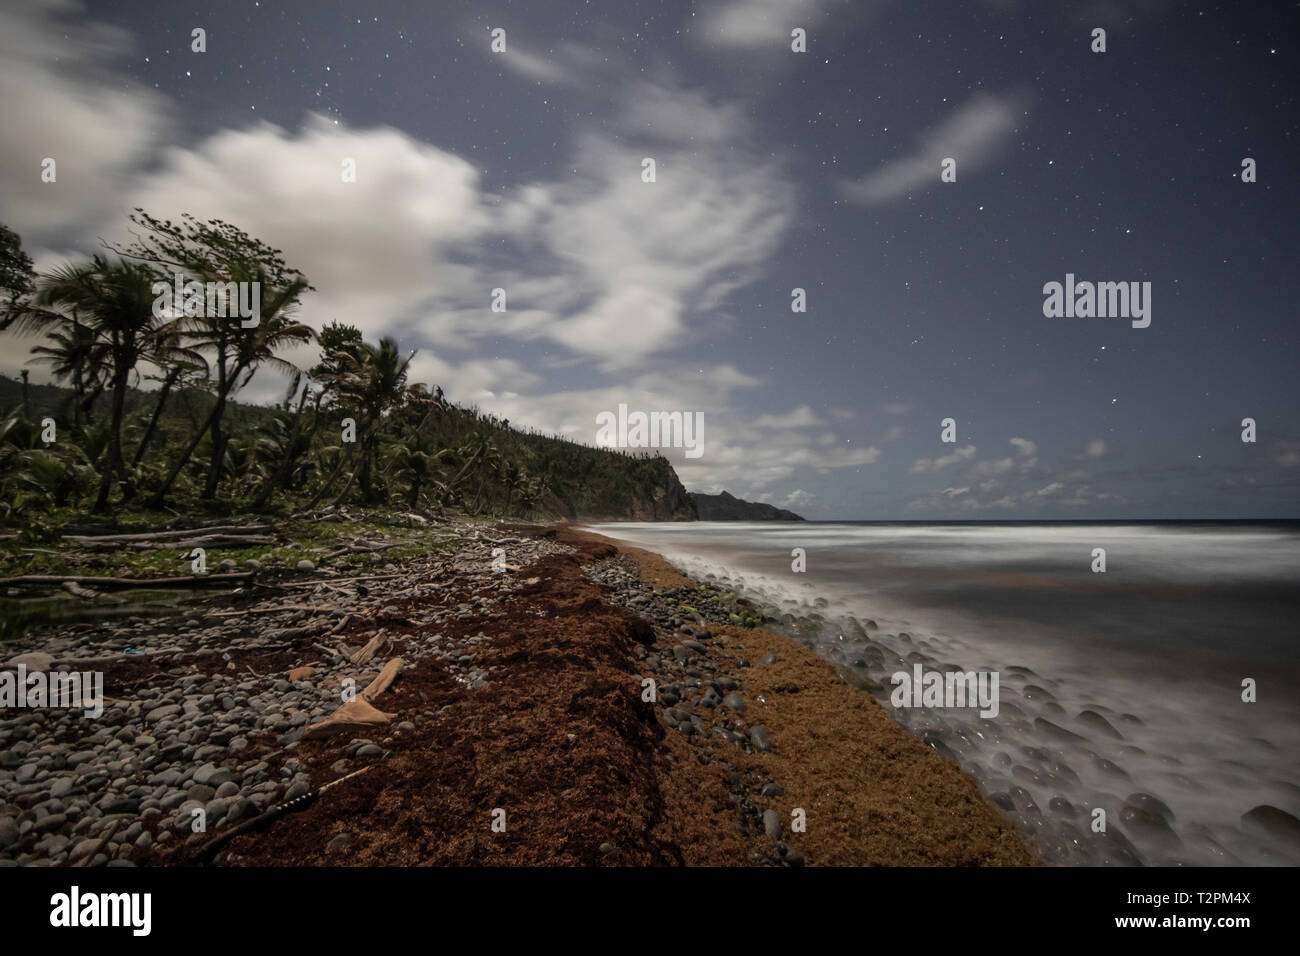 Coastline at night, La Plaine, Dominica, Caribbean Stock Photo